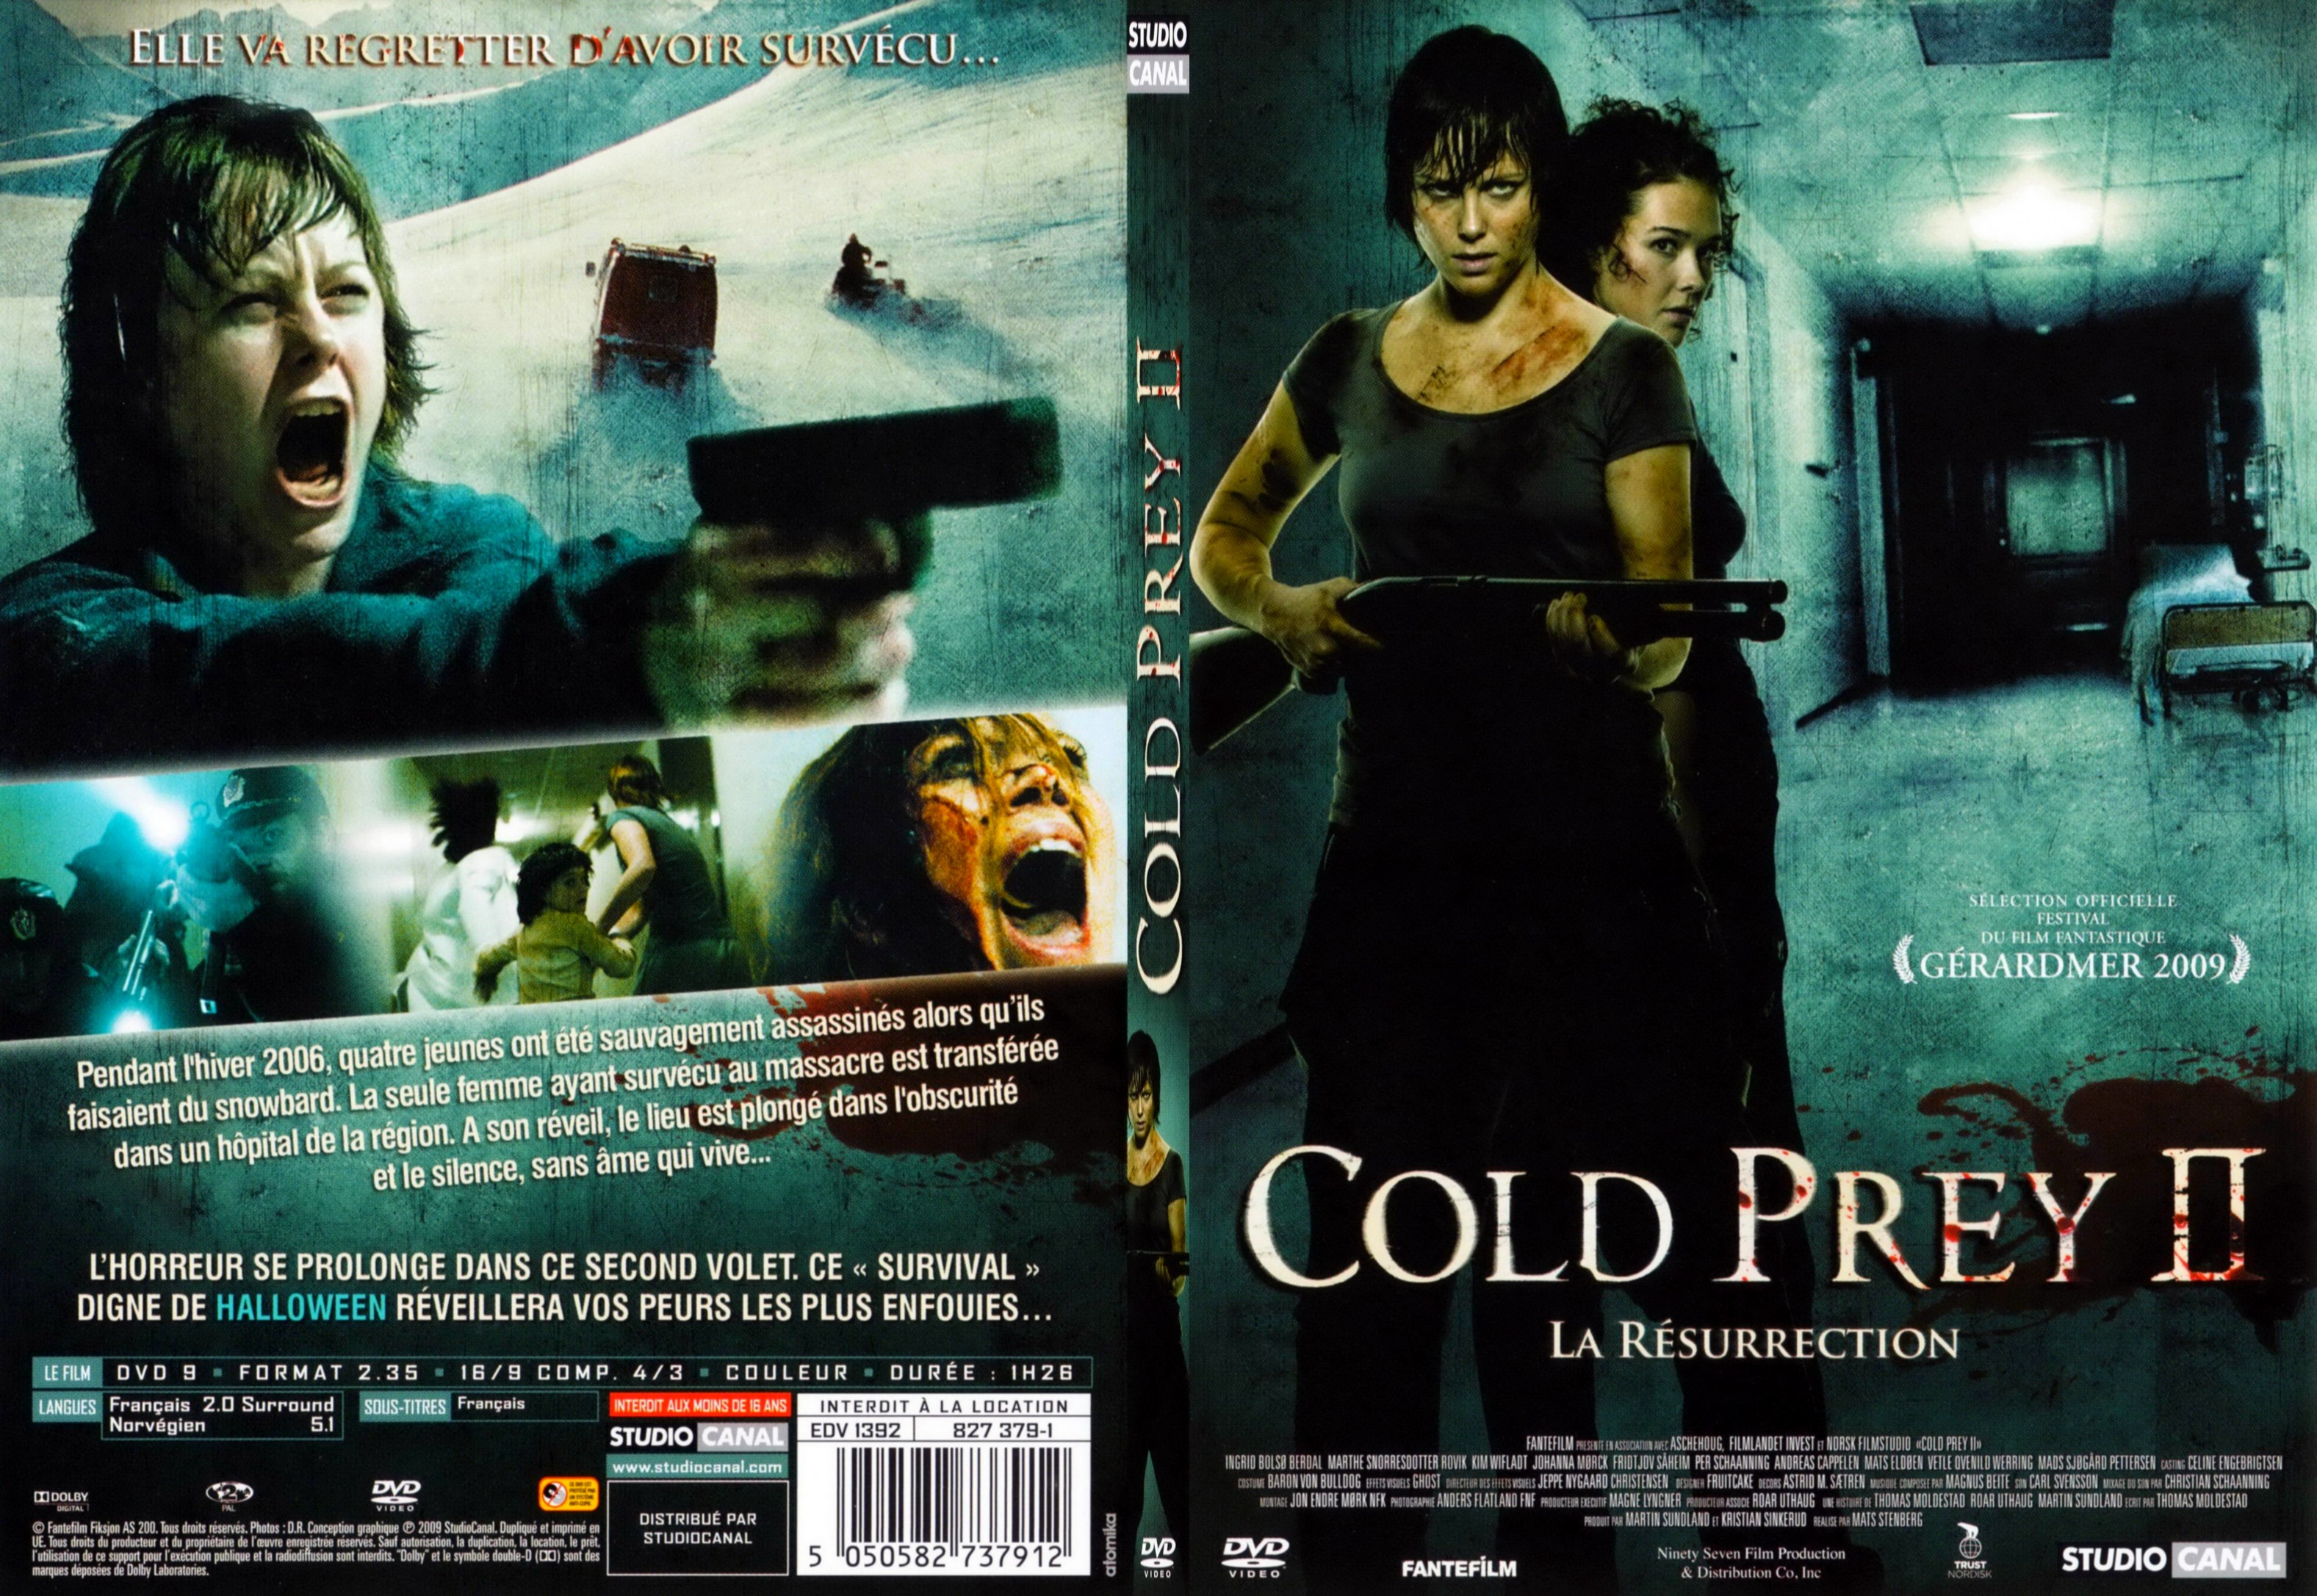 Jaquette DVD Cold prey 2 - SLIM